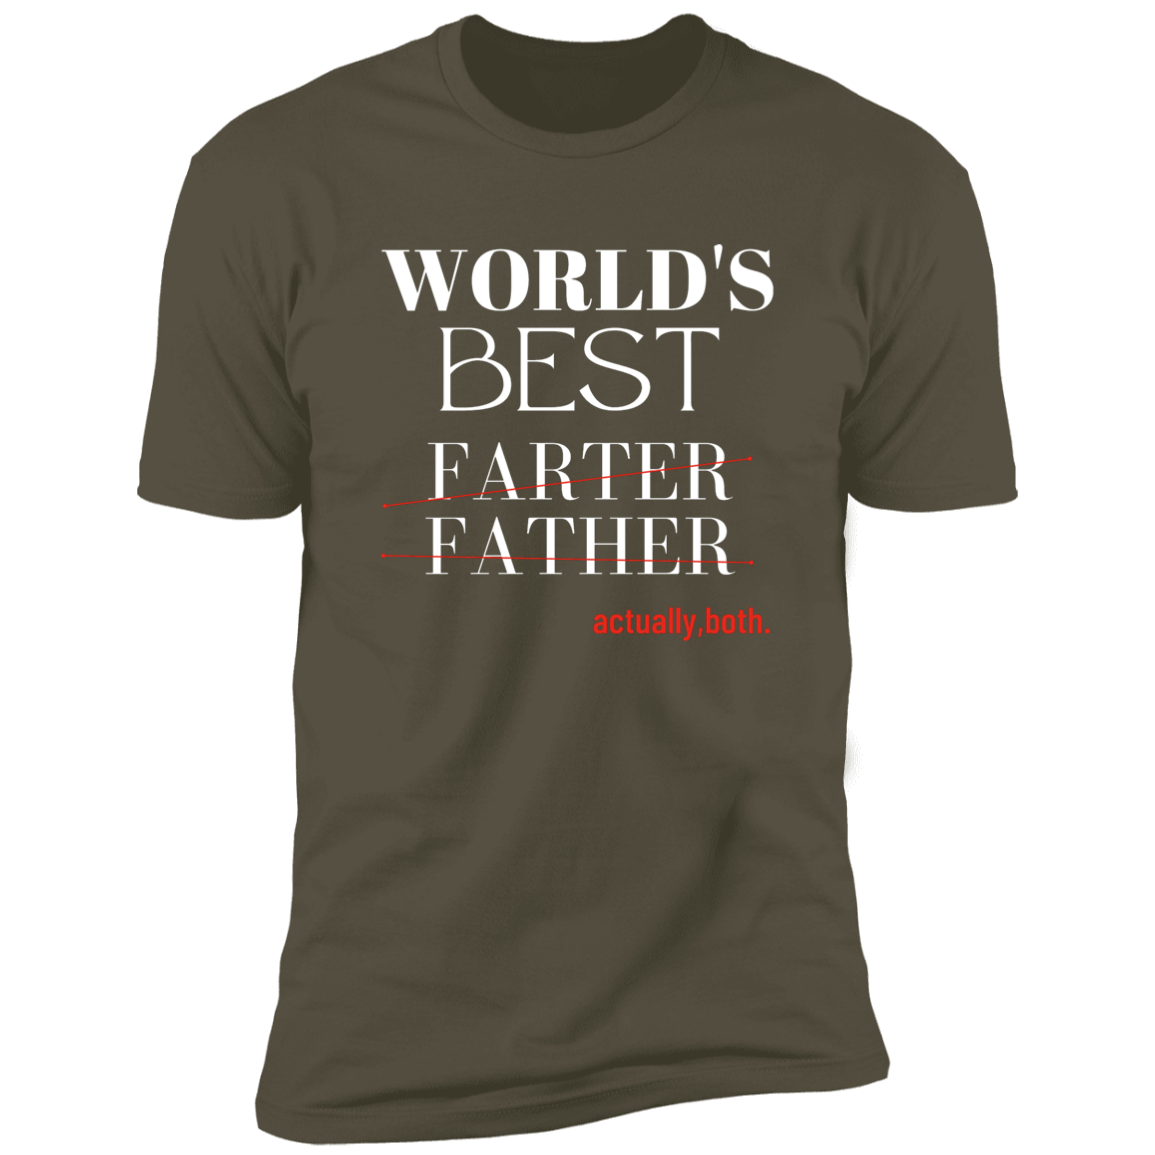 WORLD'S BEST FATHER Premium Short Sleeve Tee